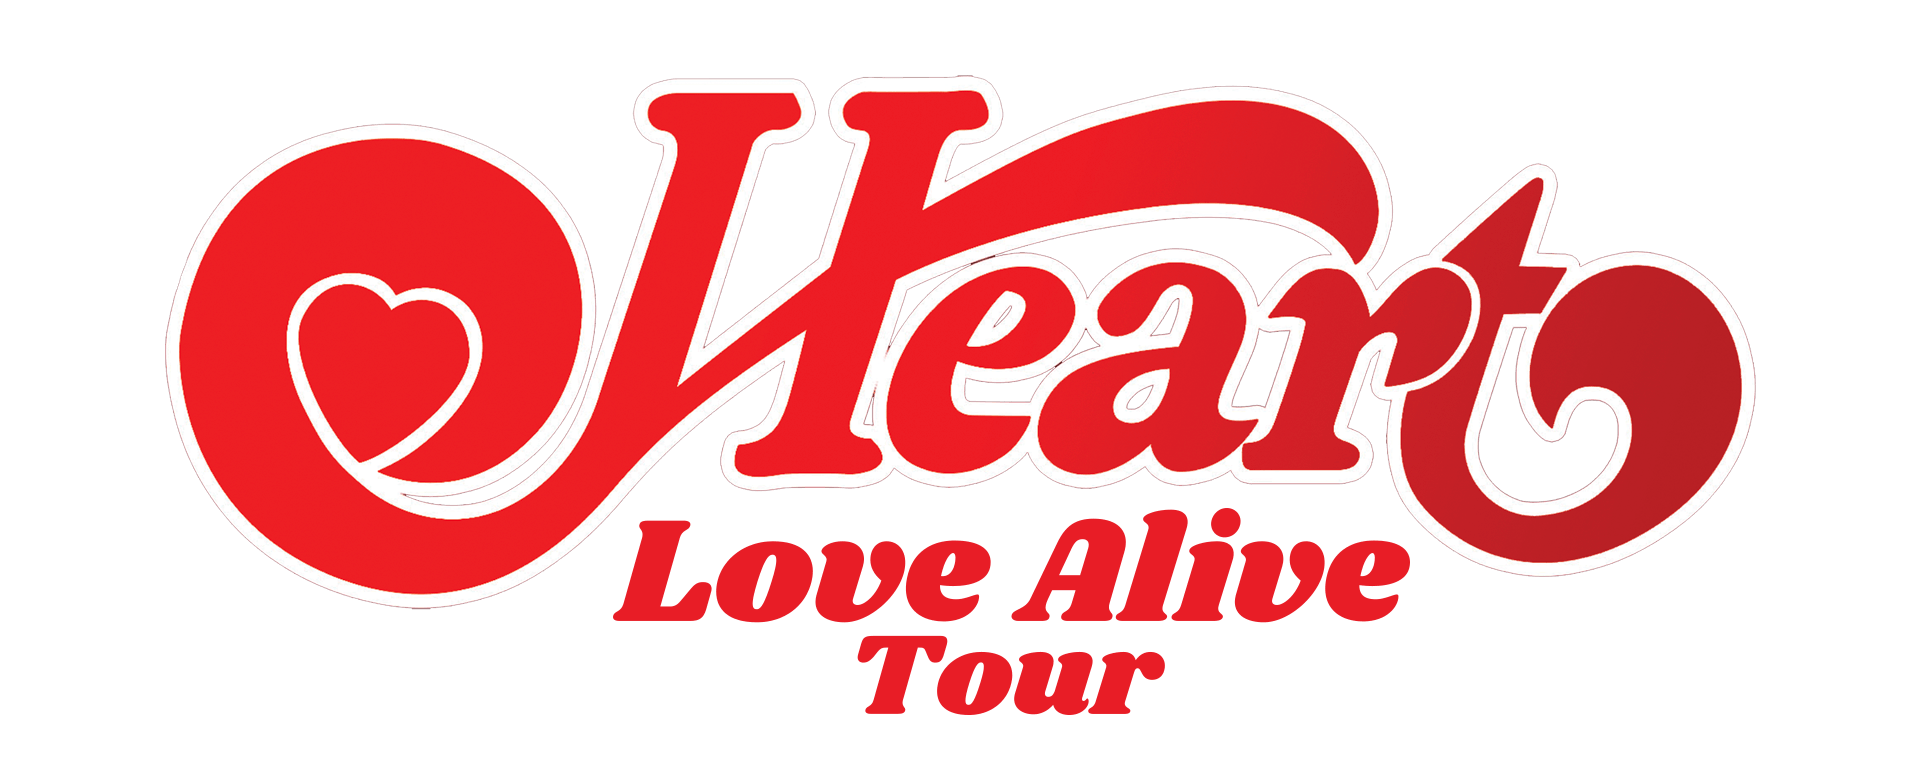 Heart Band Logo